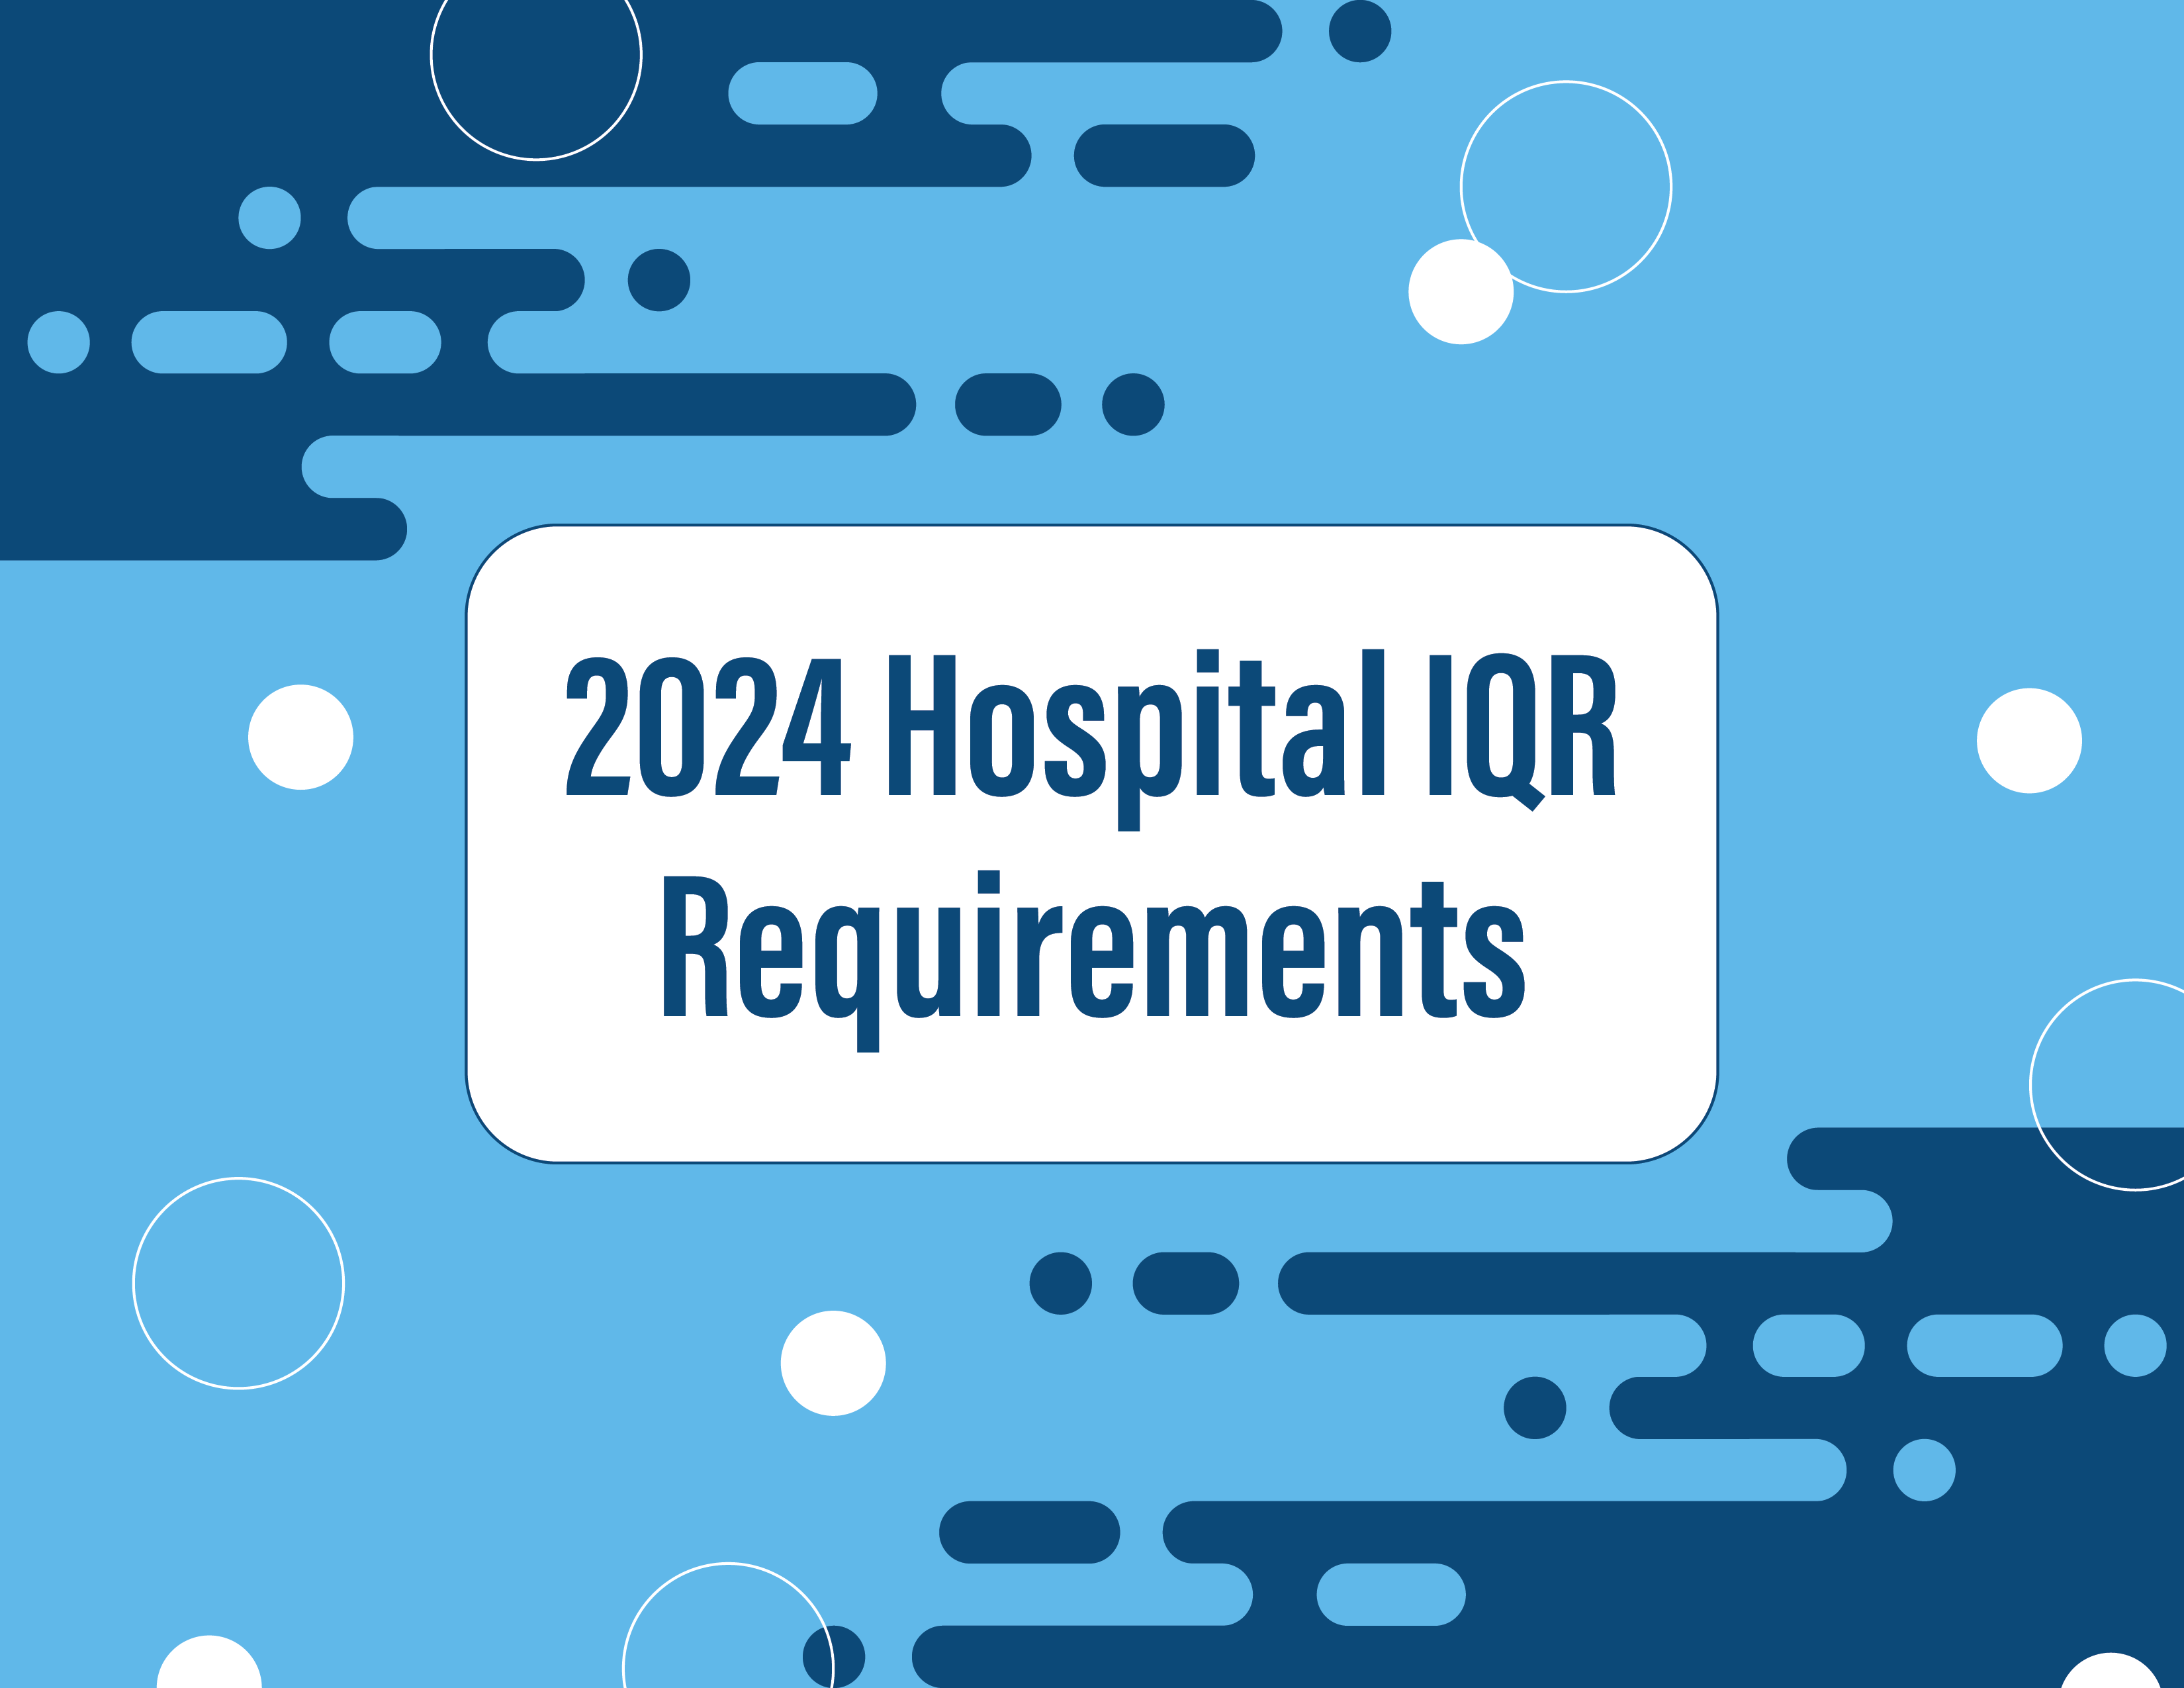 2024 Hospital IQR Requirements